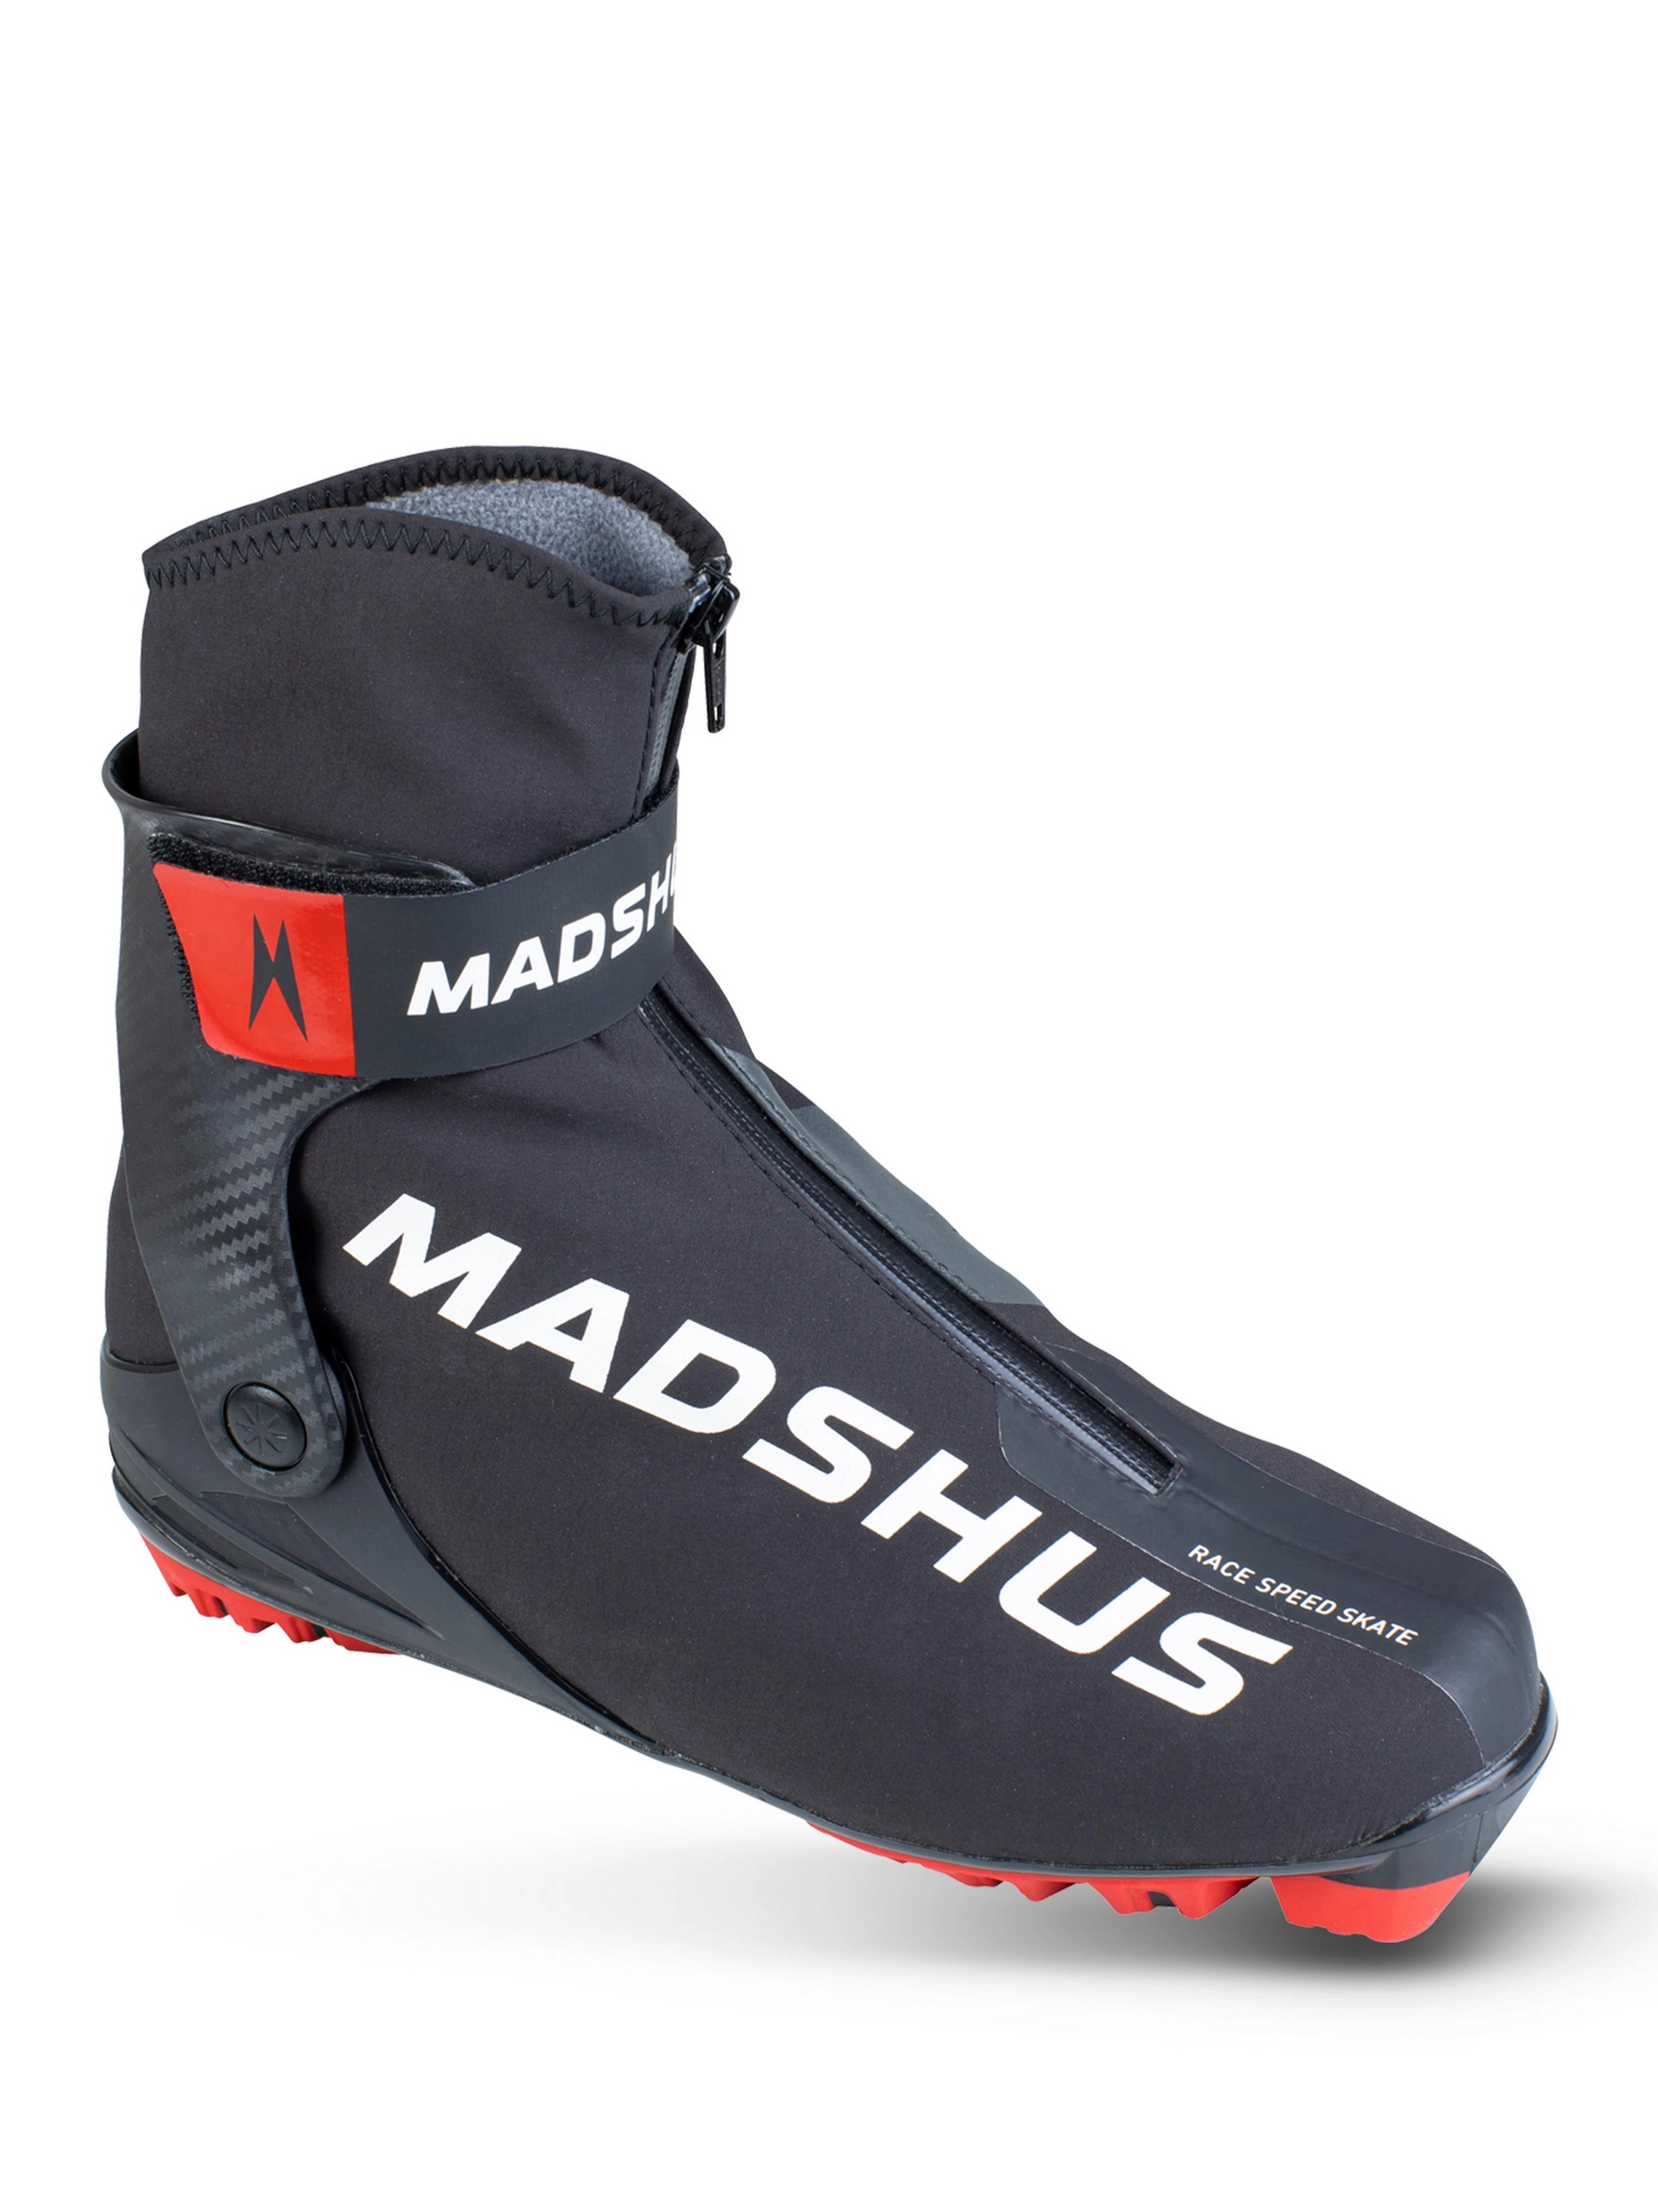 Madshus Race Speed Skate Schuh